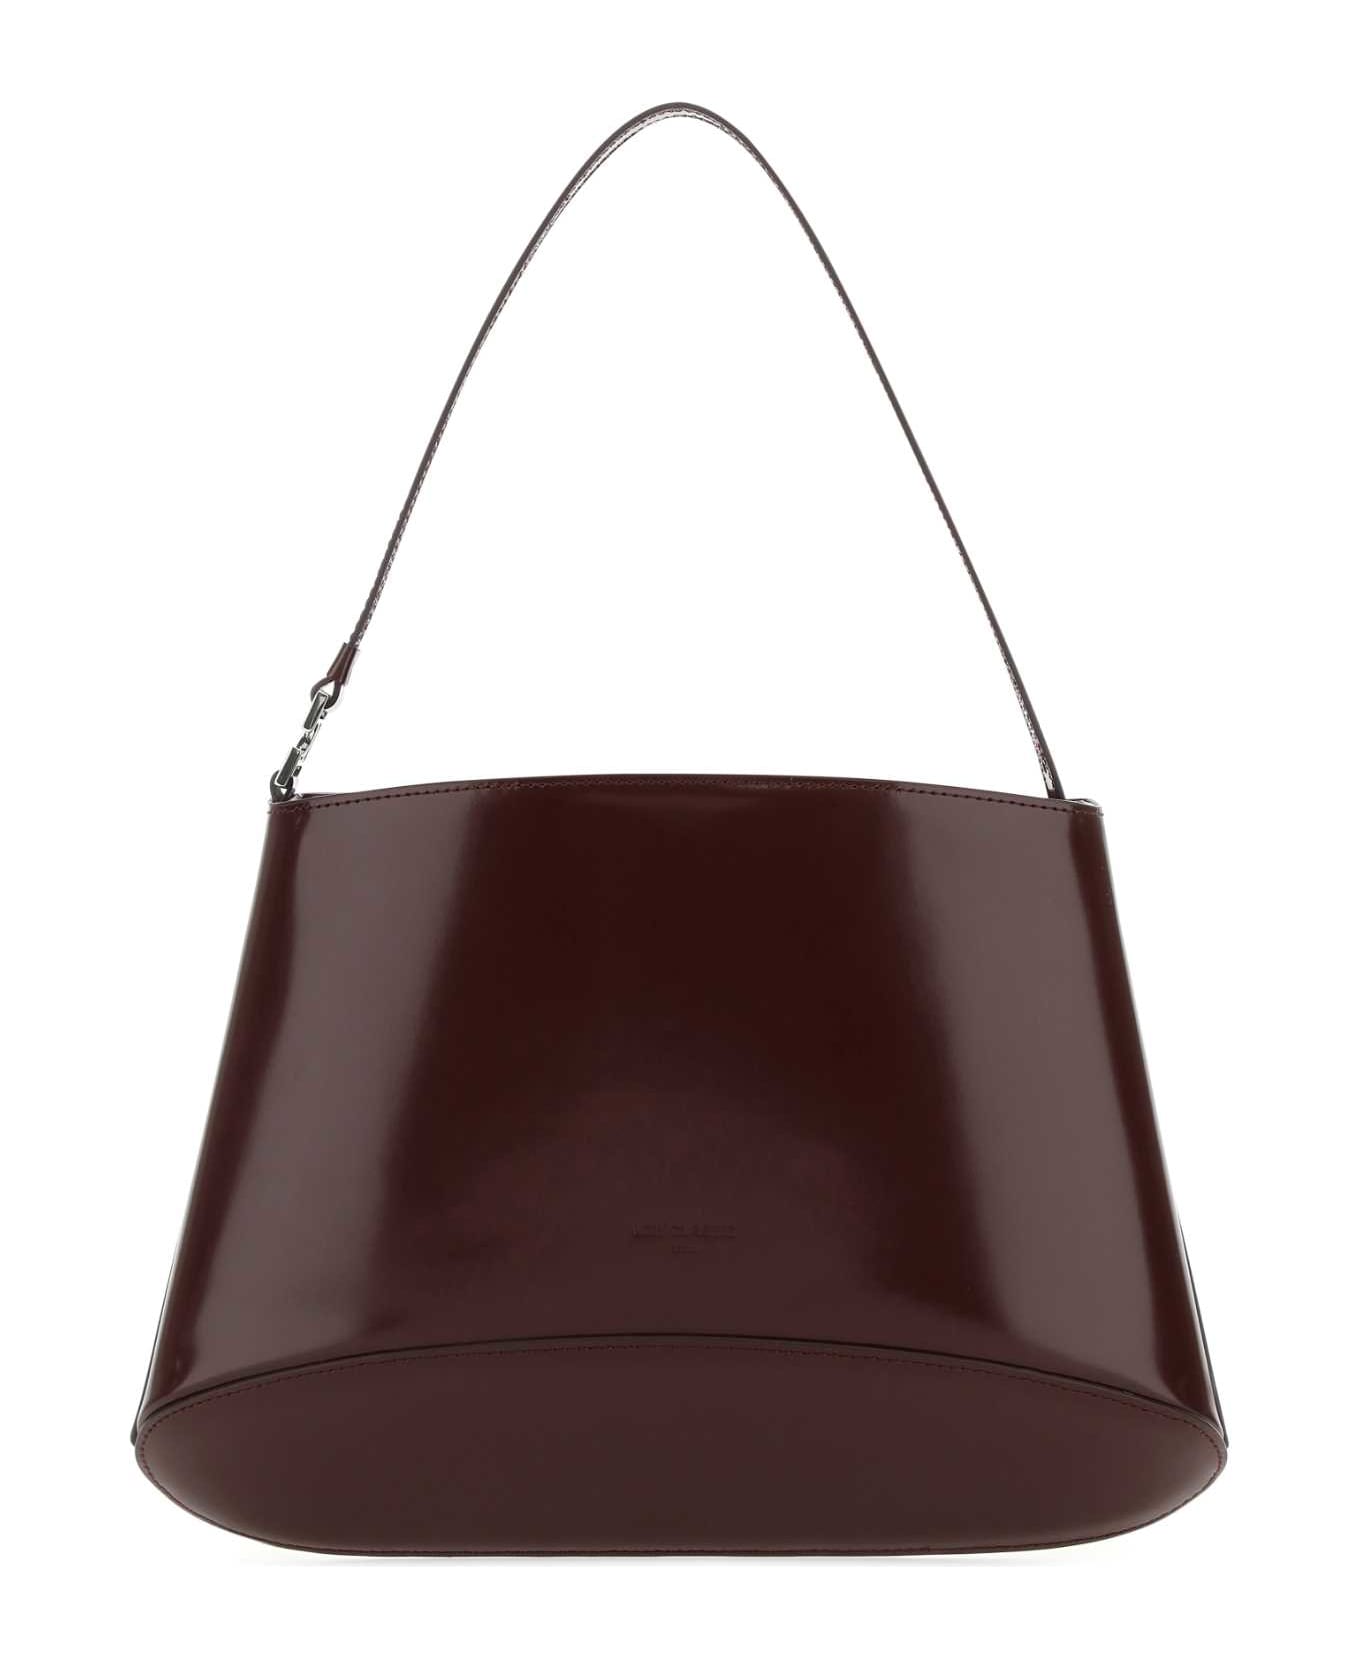 Low Classic Grape Leather Handbag - 0060